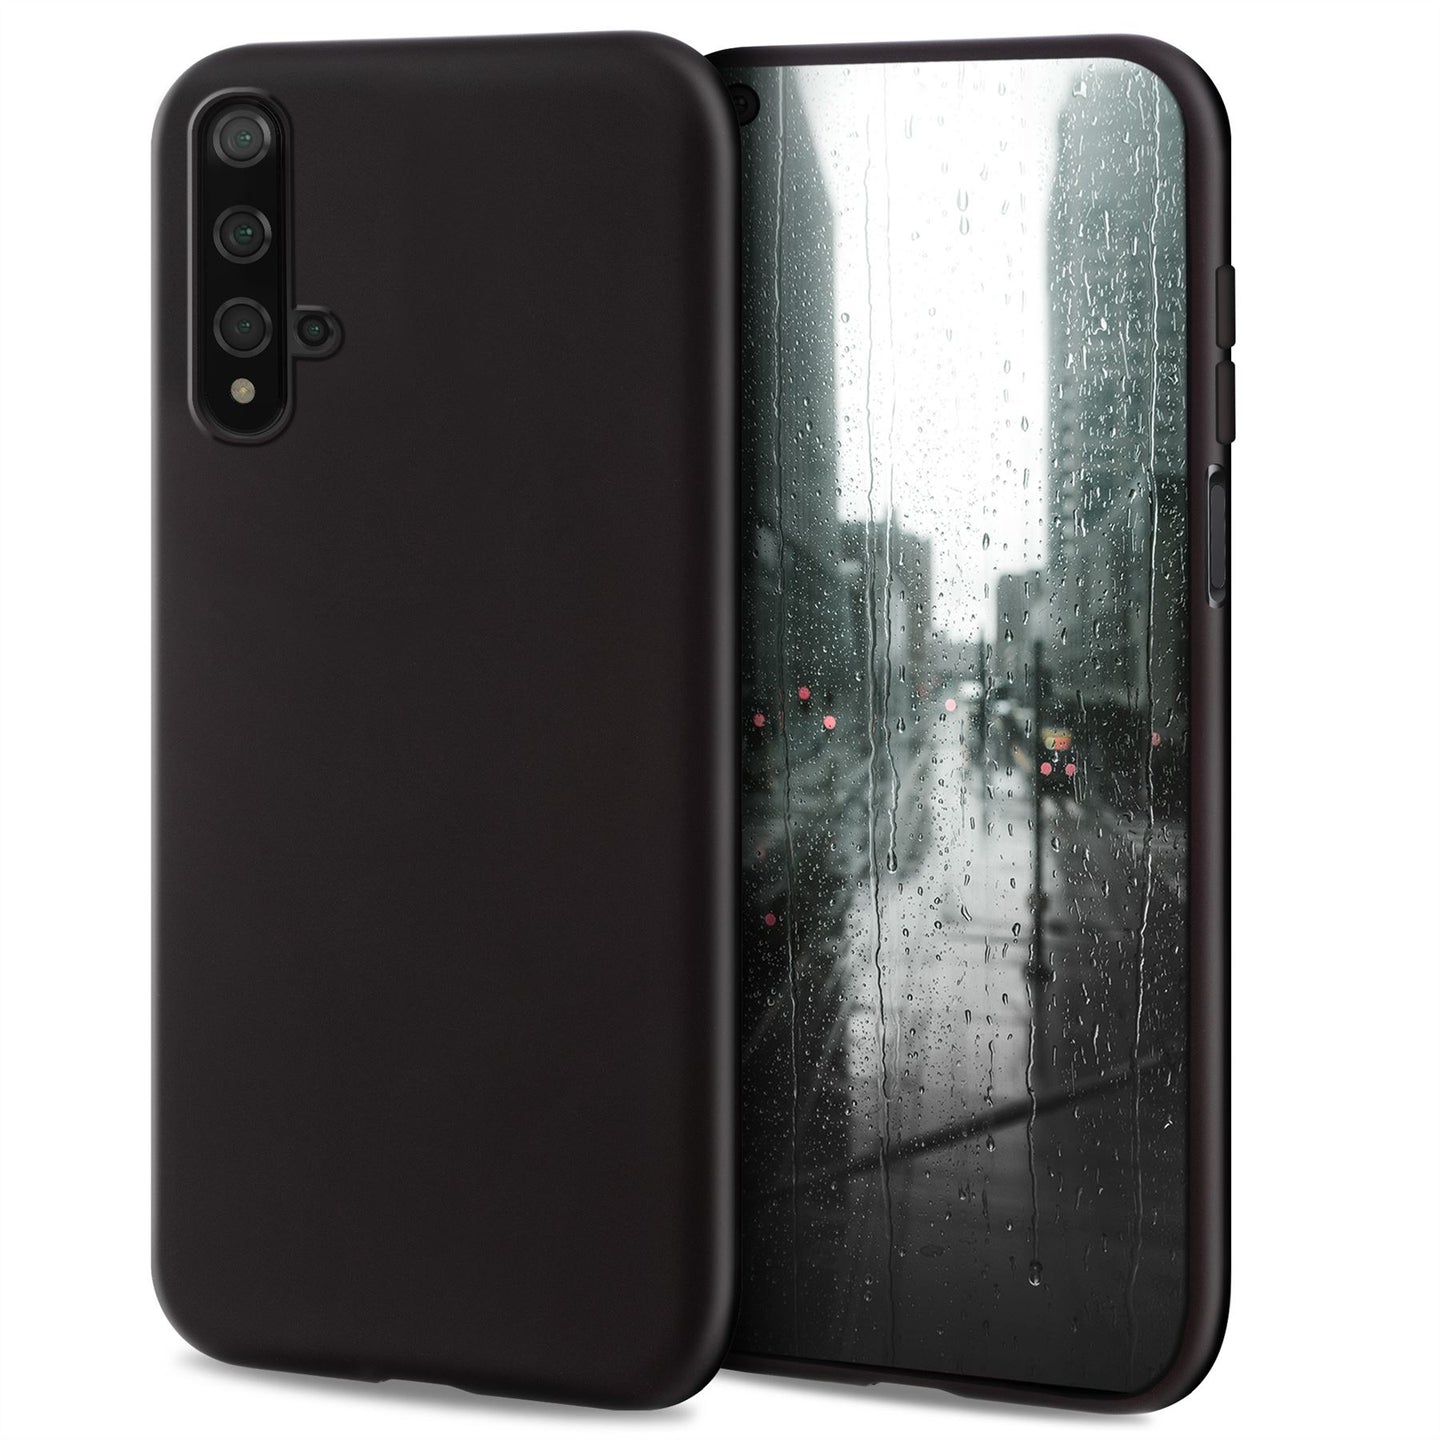 Moozy Minimalist Series Silicone Case for Huawei Nova 5T and Honor 20, Black - Matte Finish Slim Soft TPU Cover